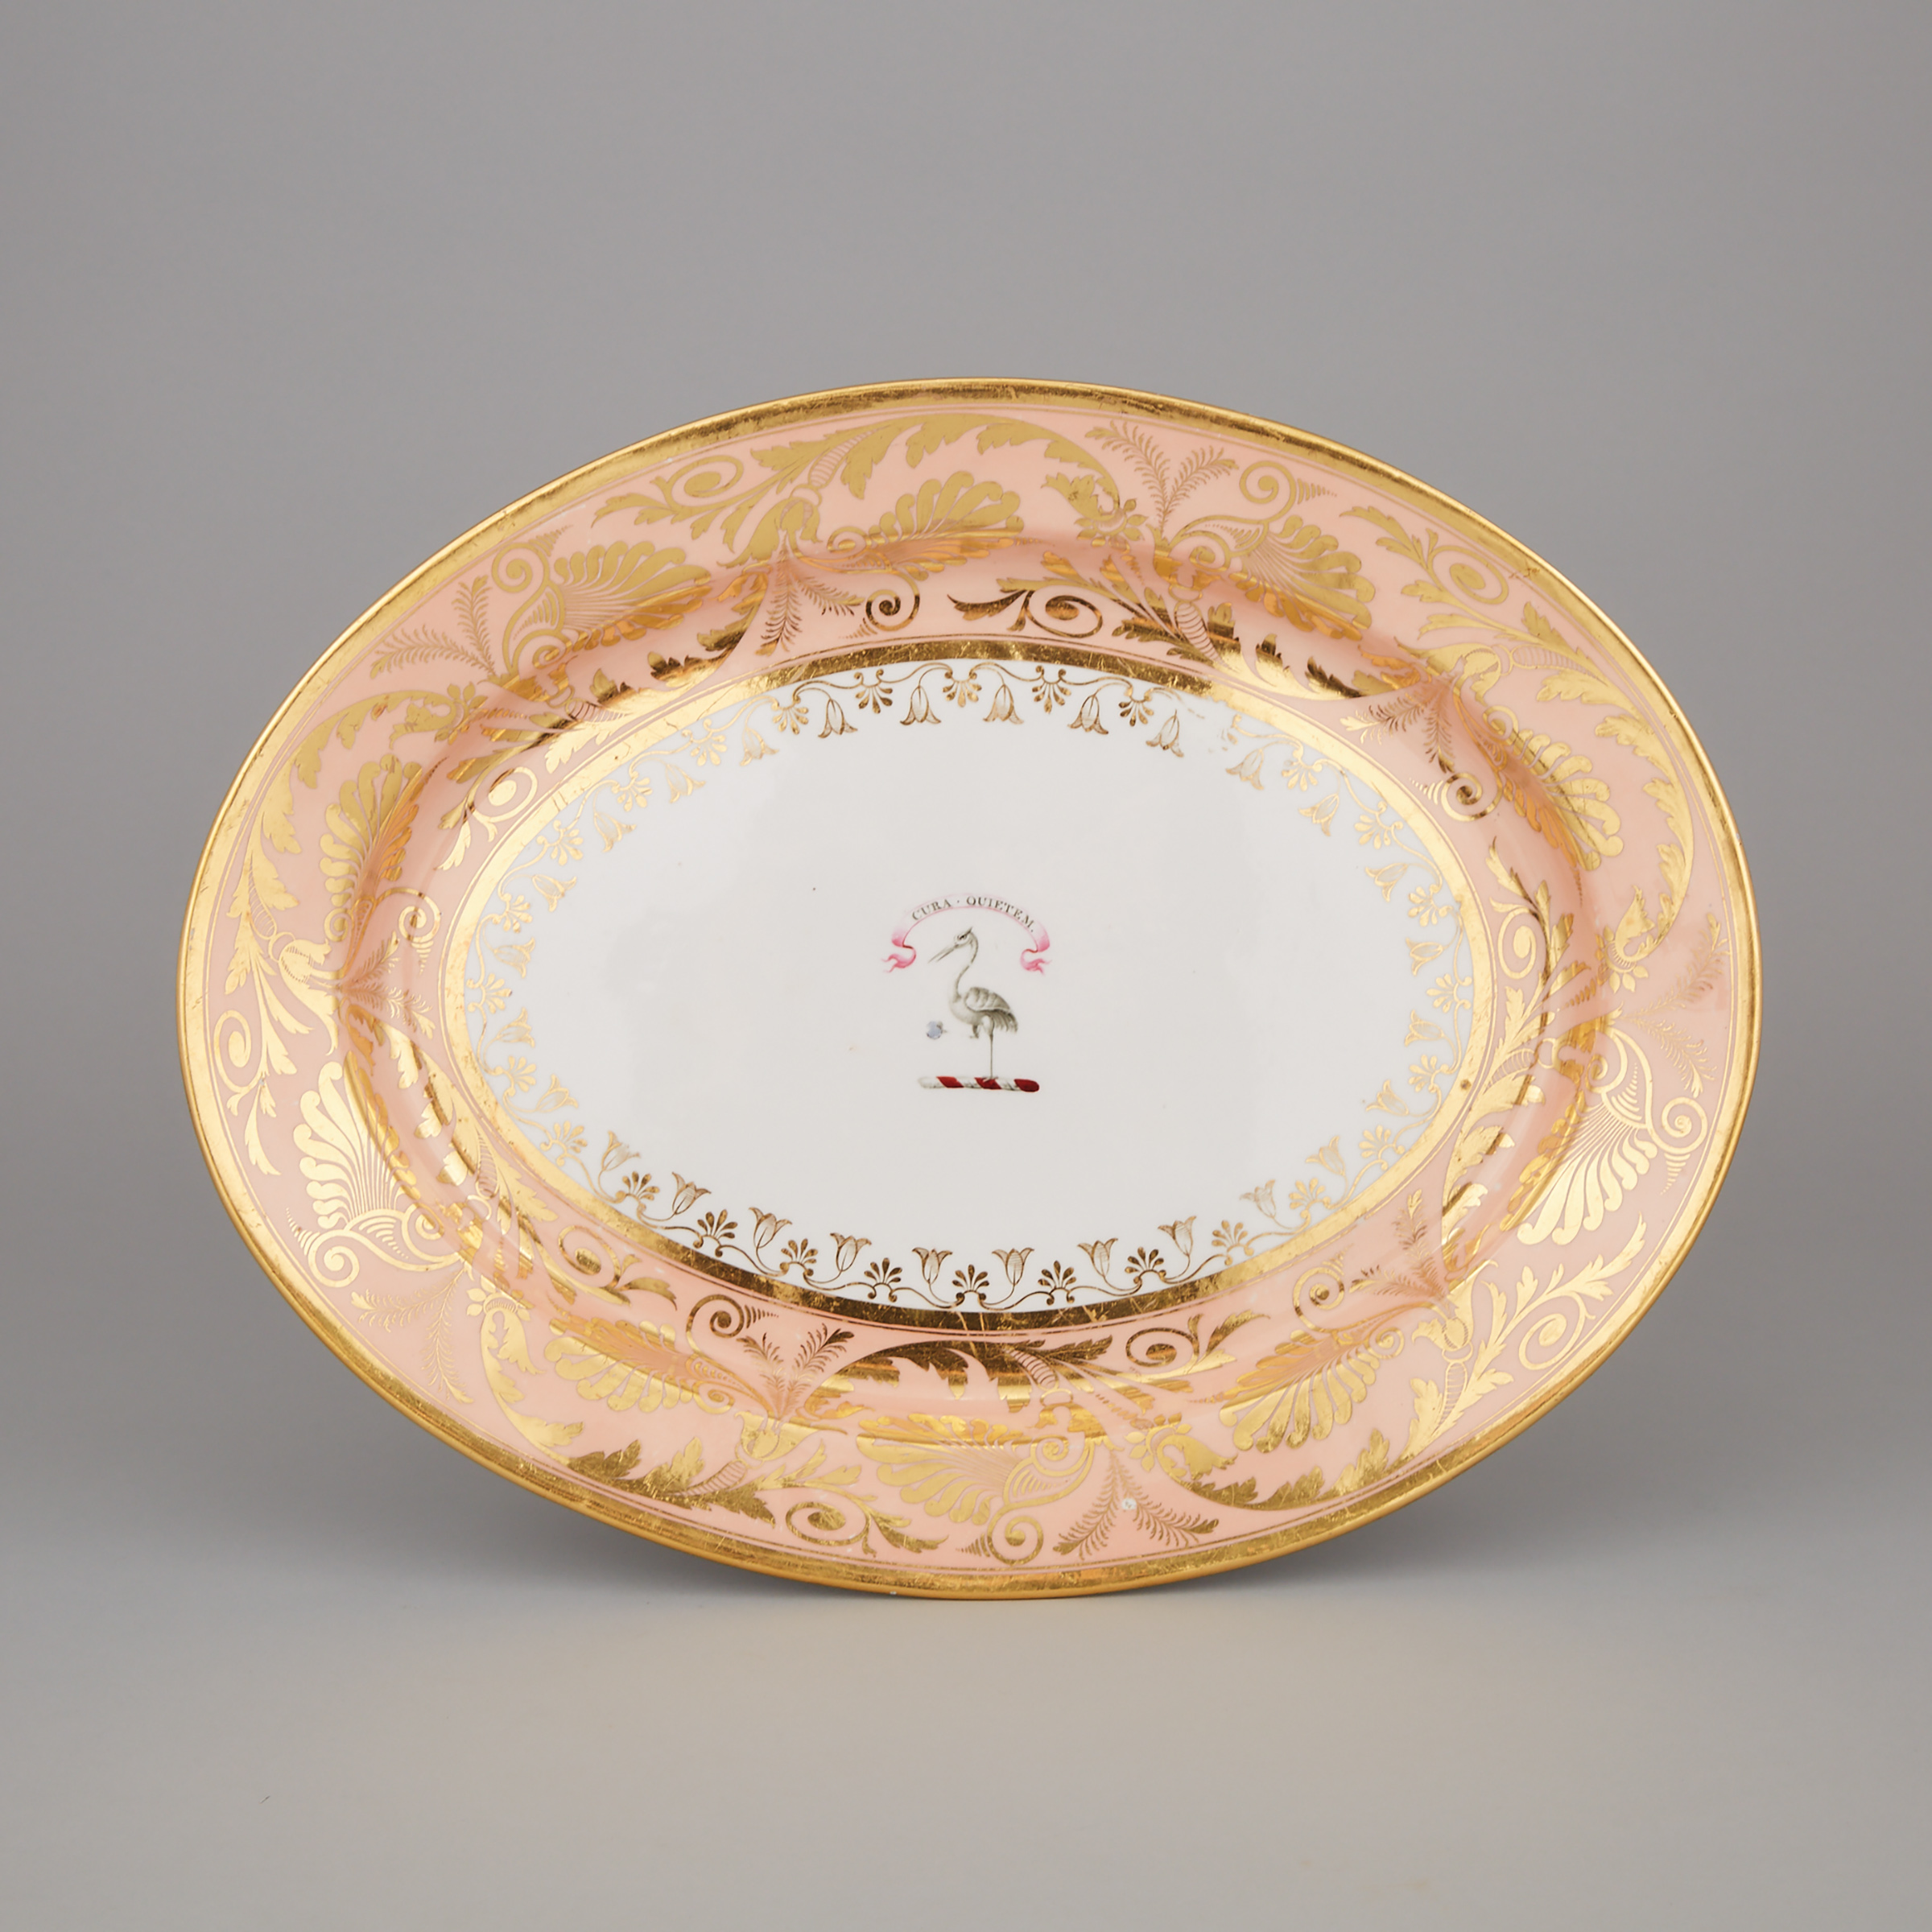 Barr, Flight & Barr Worcester Oval Platter, c.1804-13